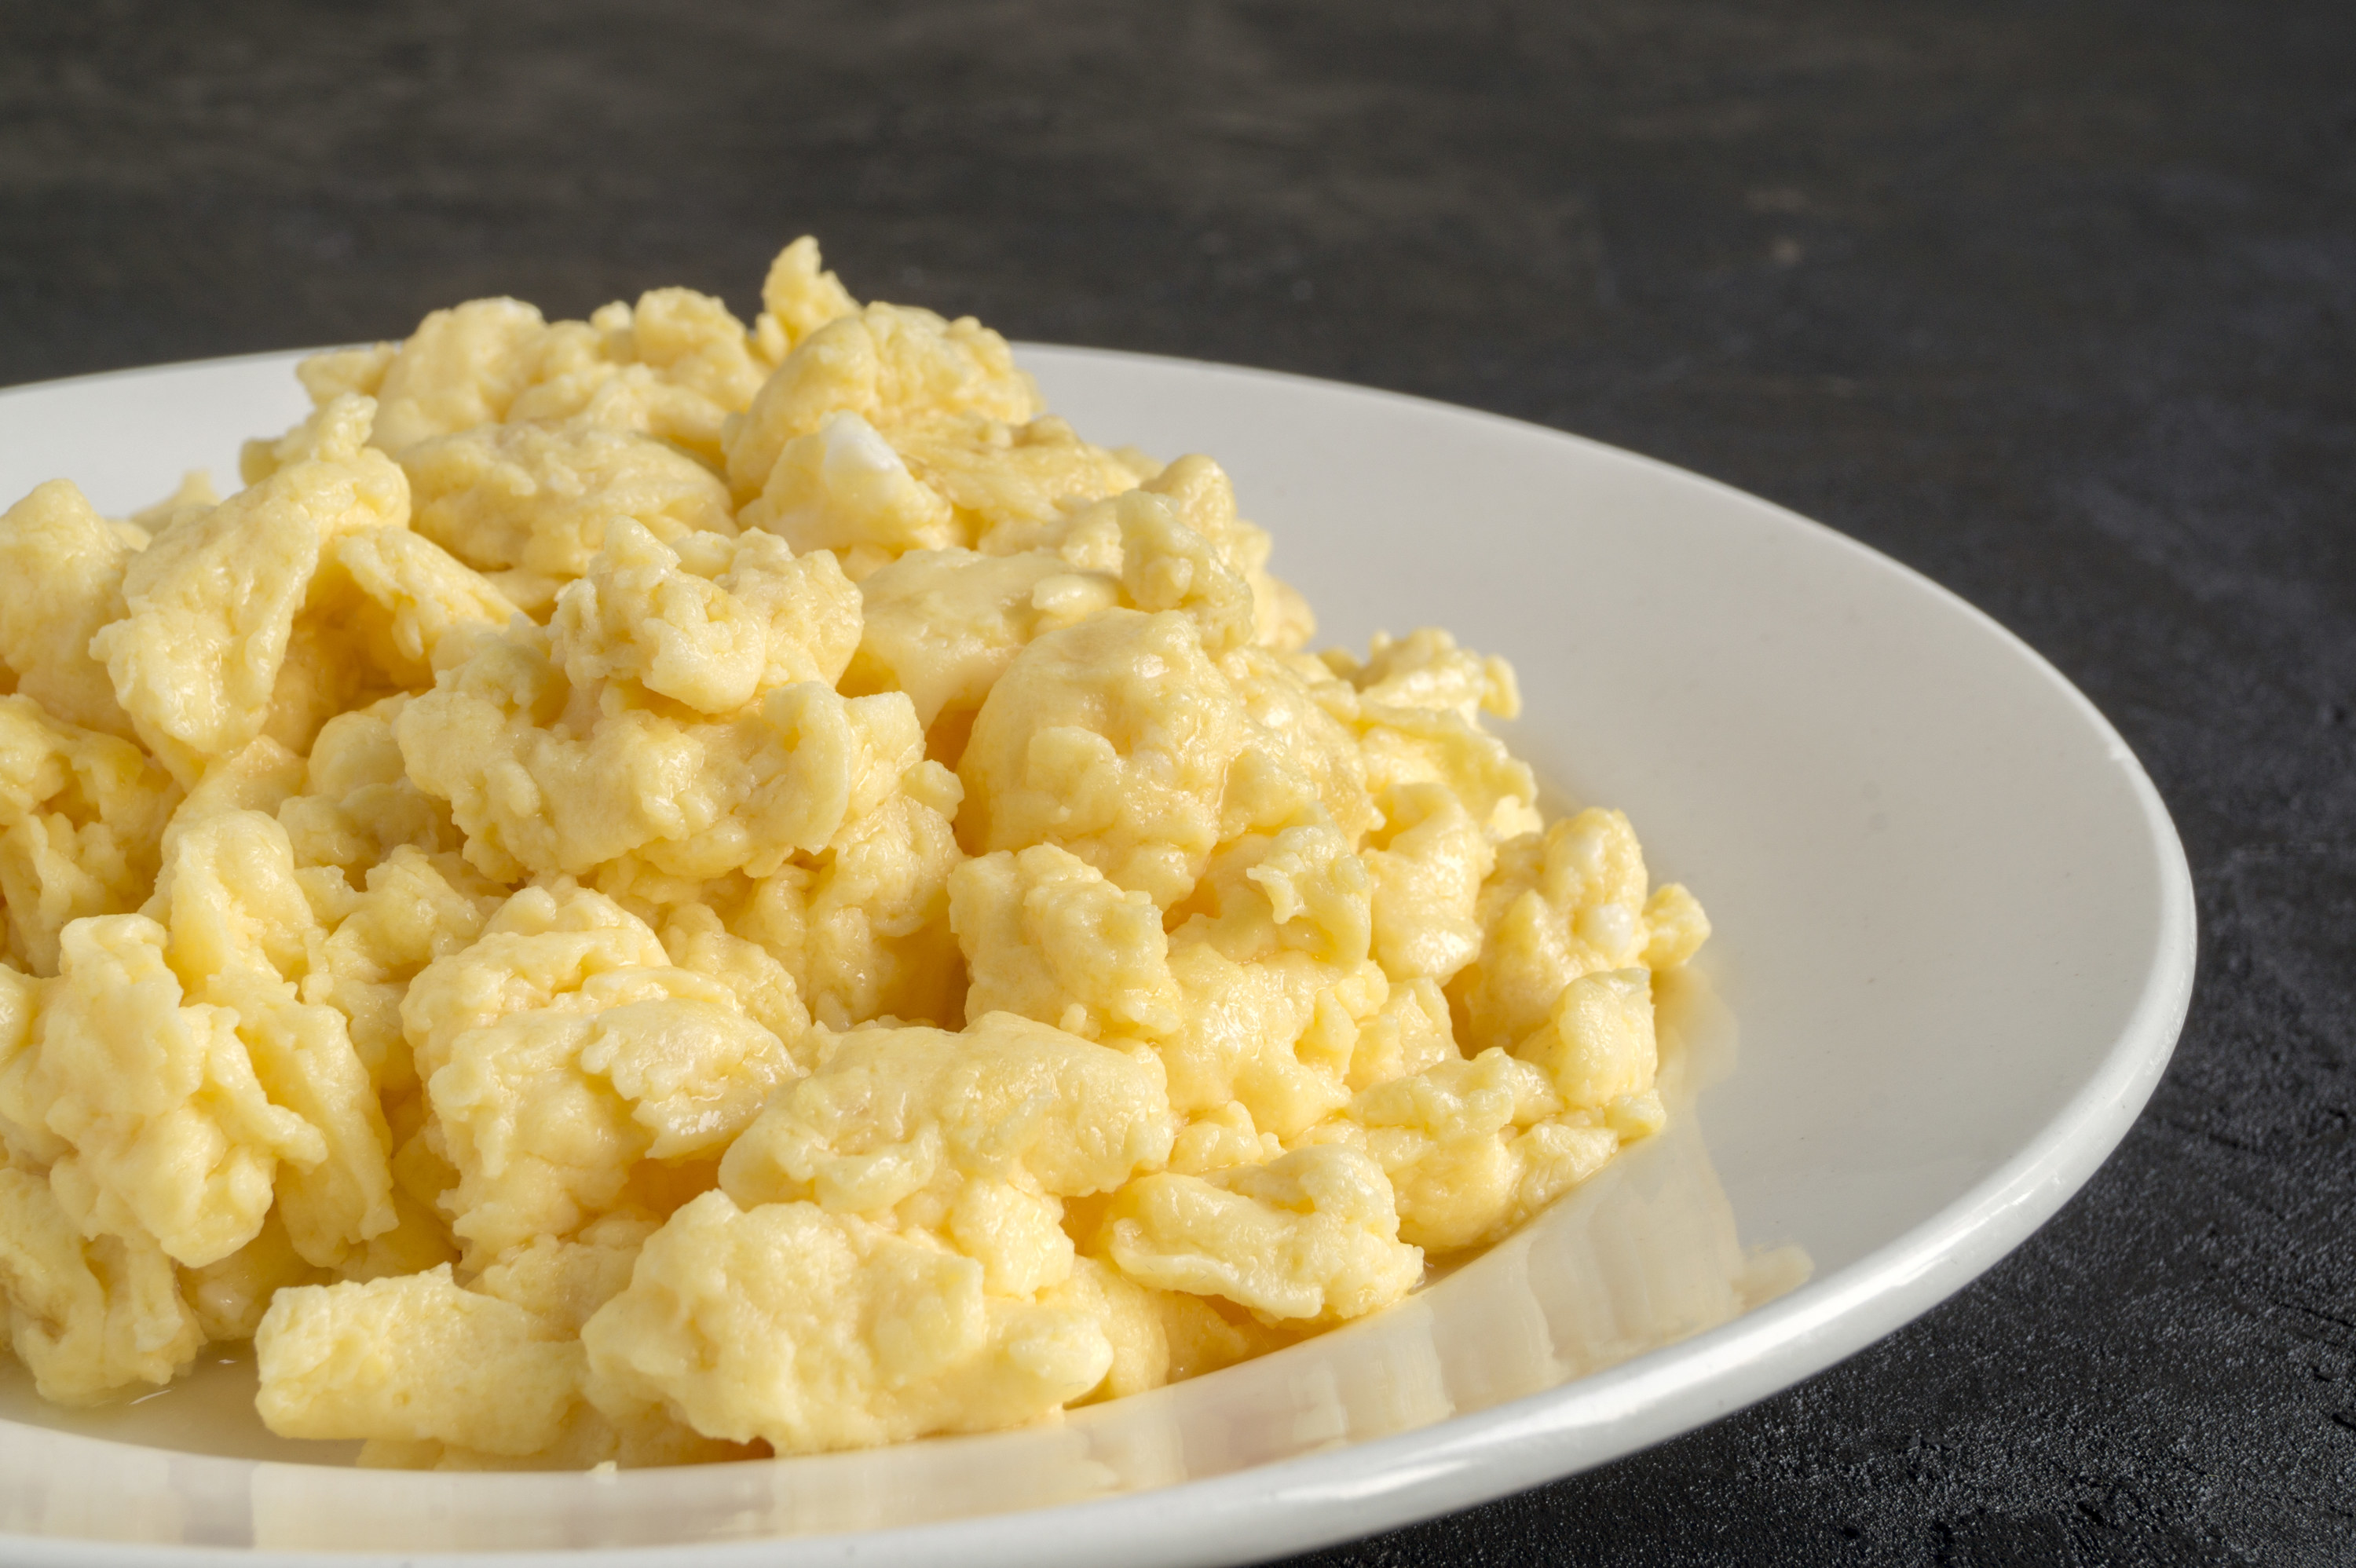 A plate of scrambled eggs